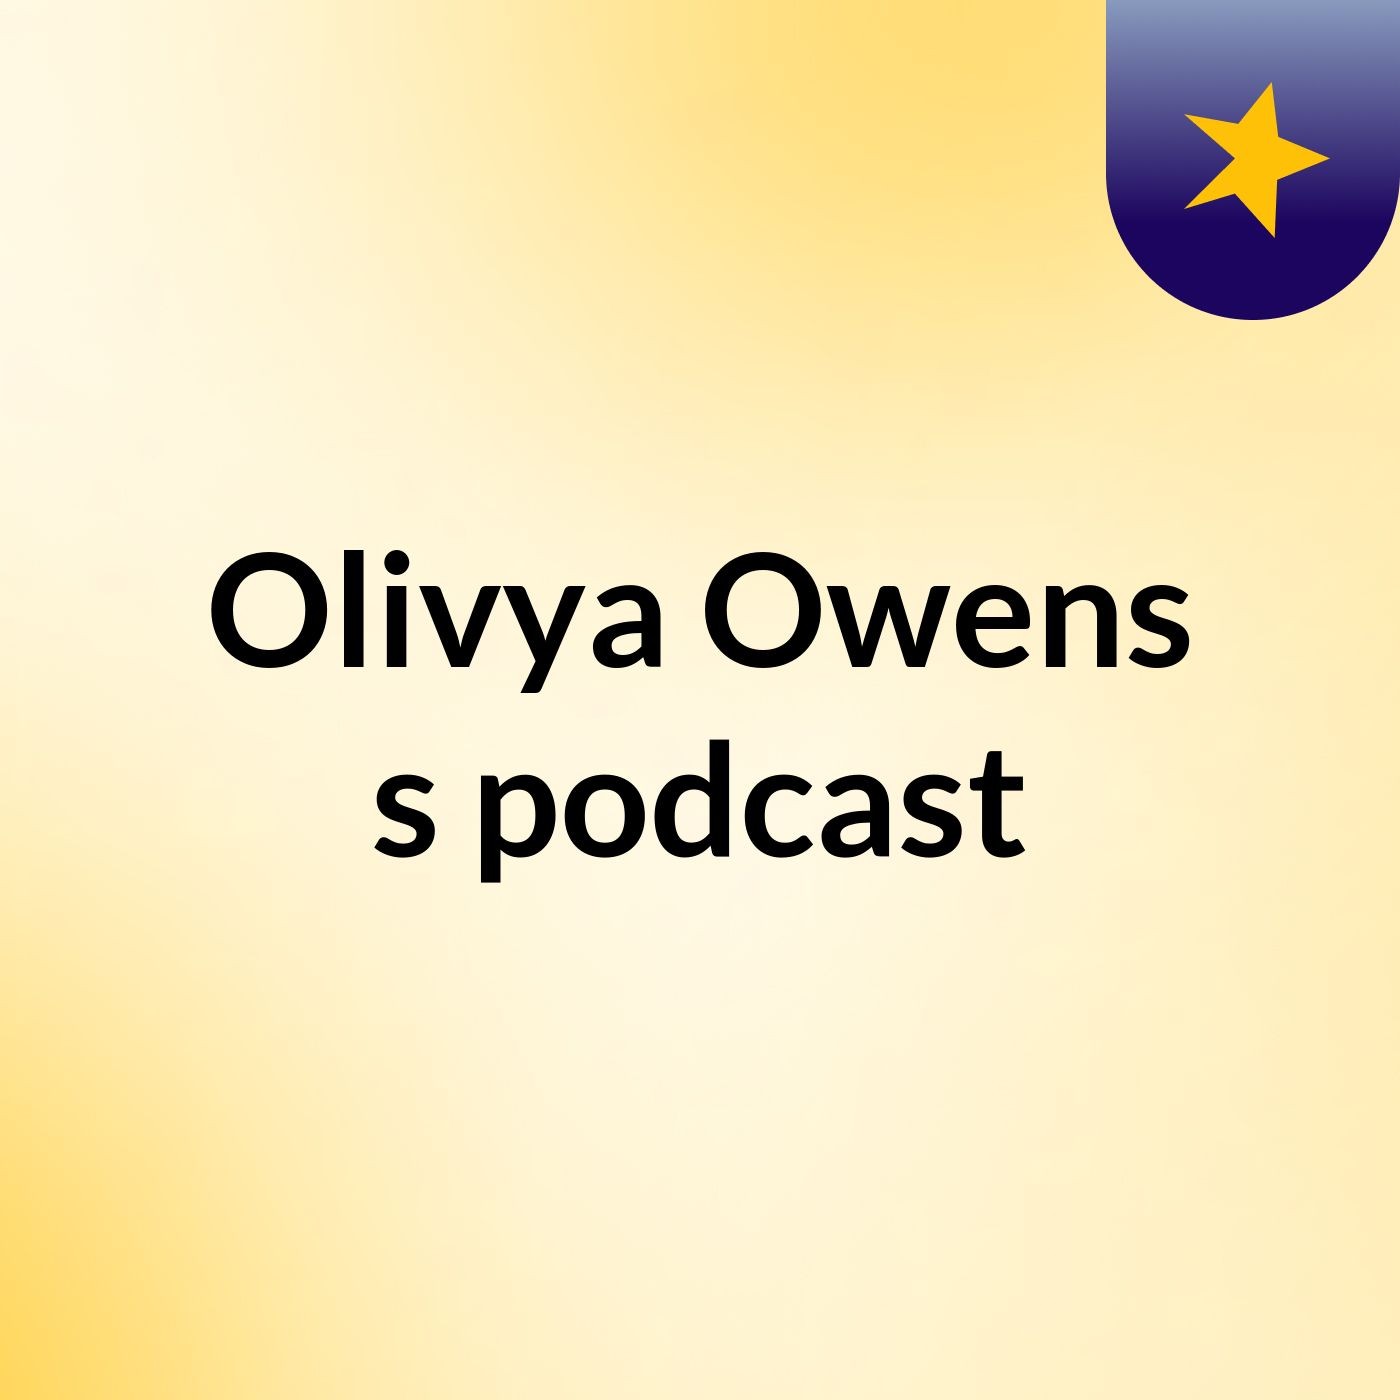 Olivya Owens's podcast